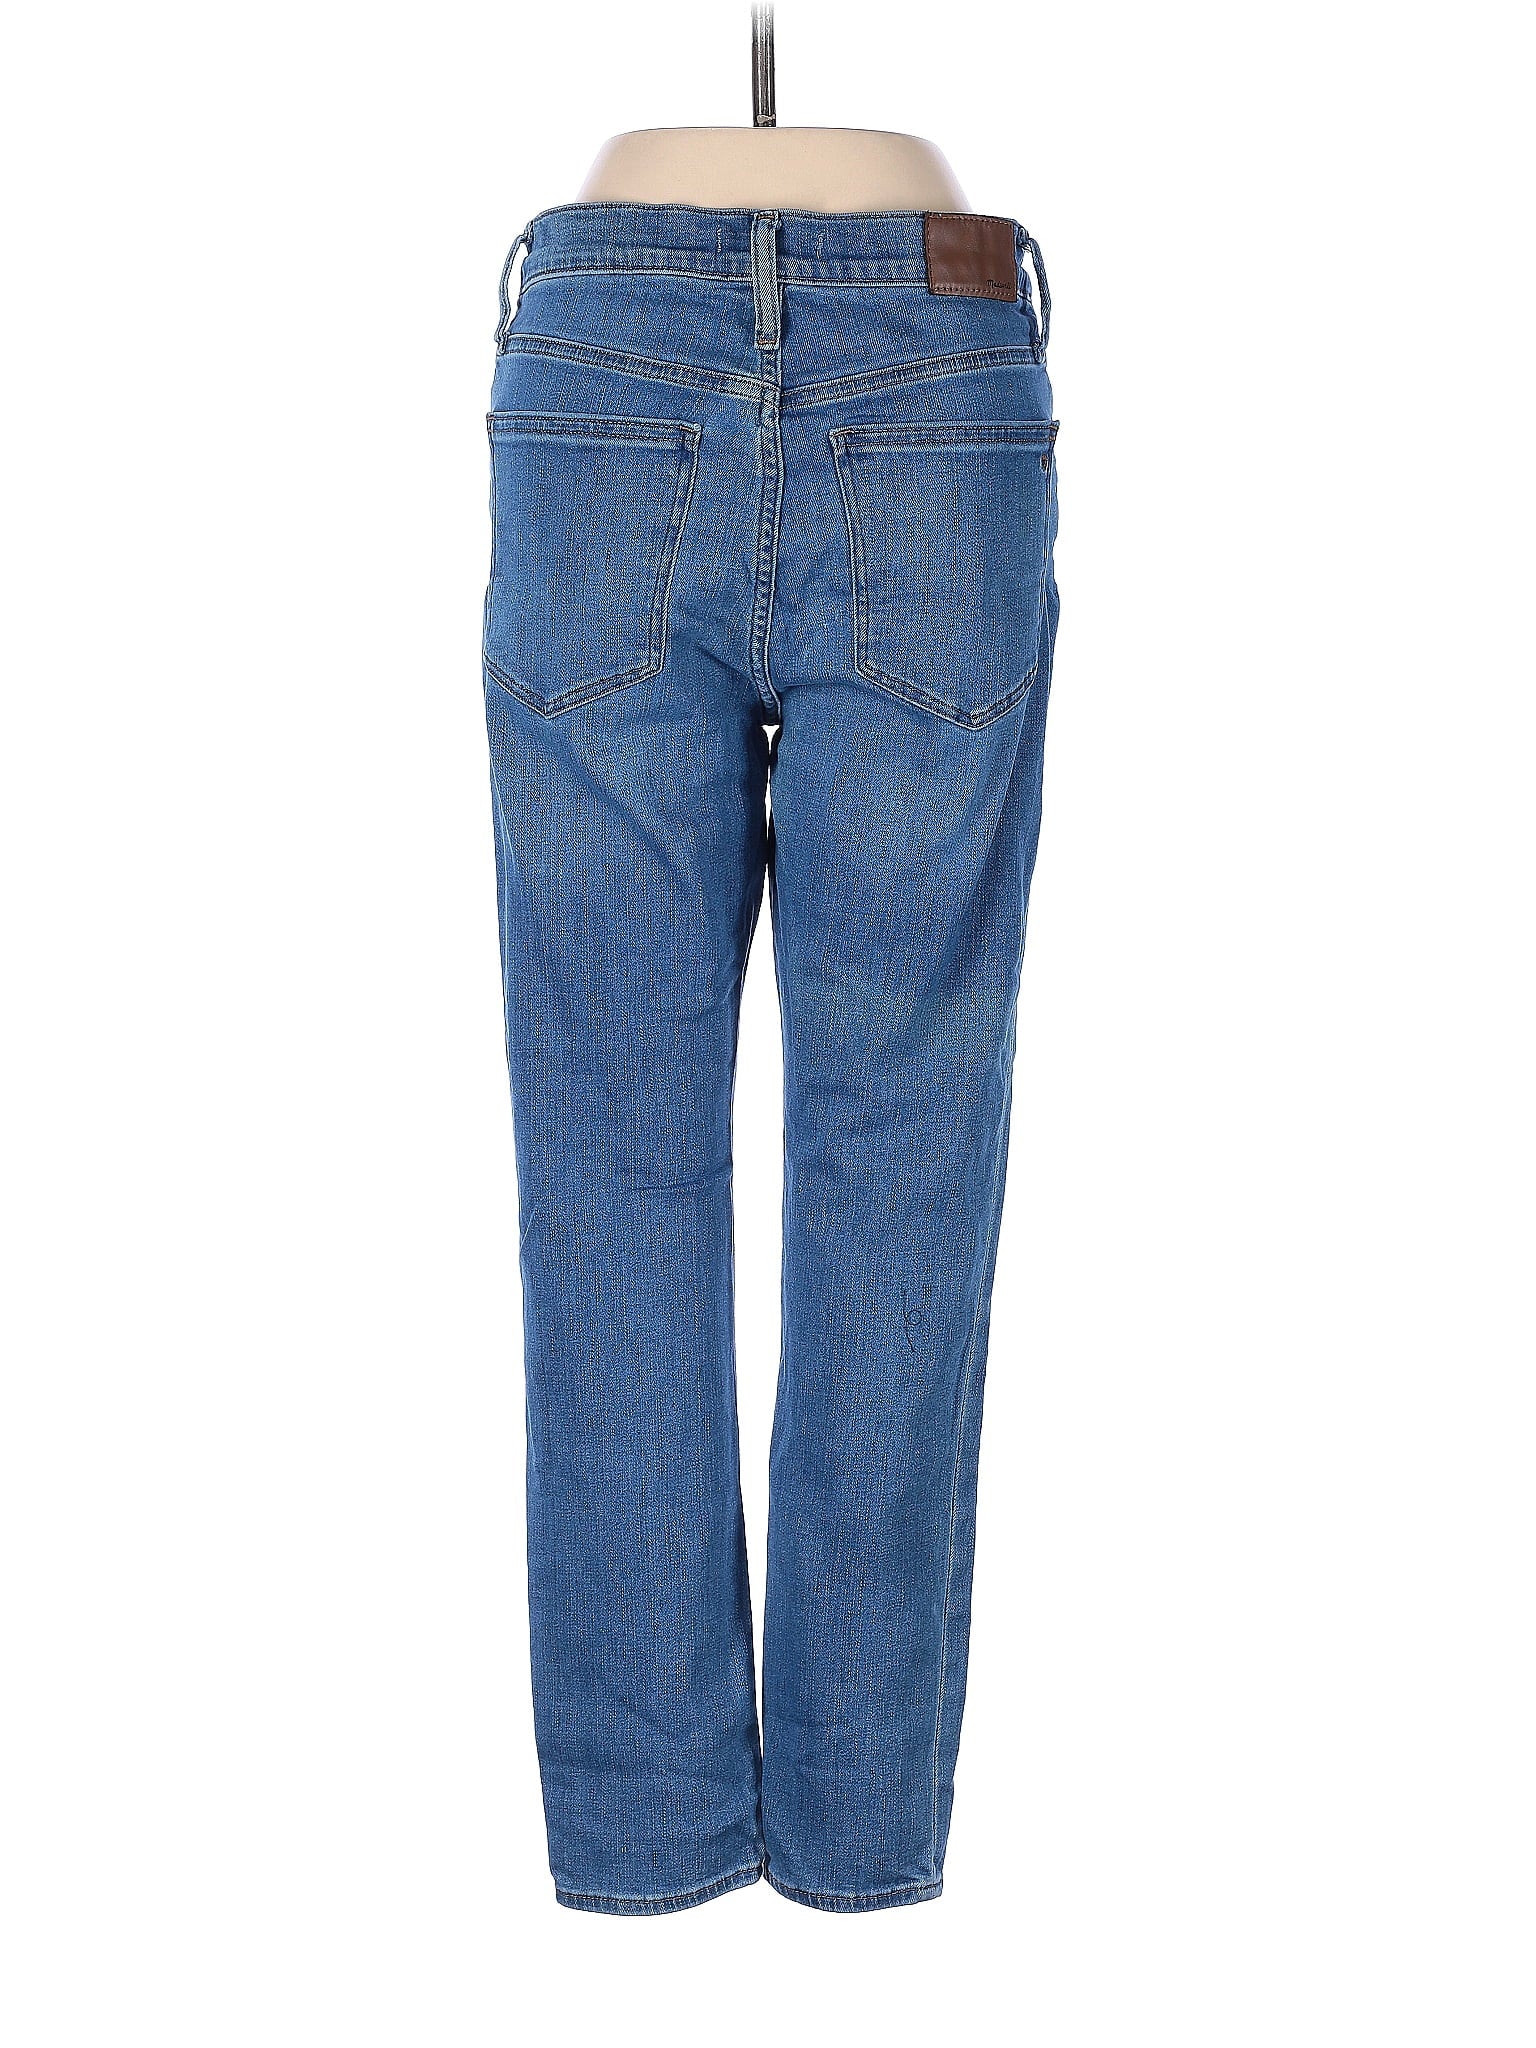 Mid-Rise Boyjeans Jeans in Medium Wash waist size - 27